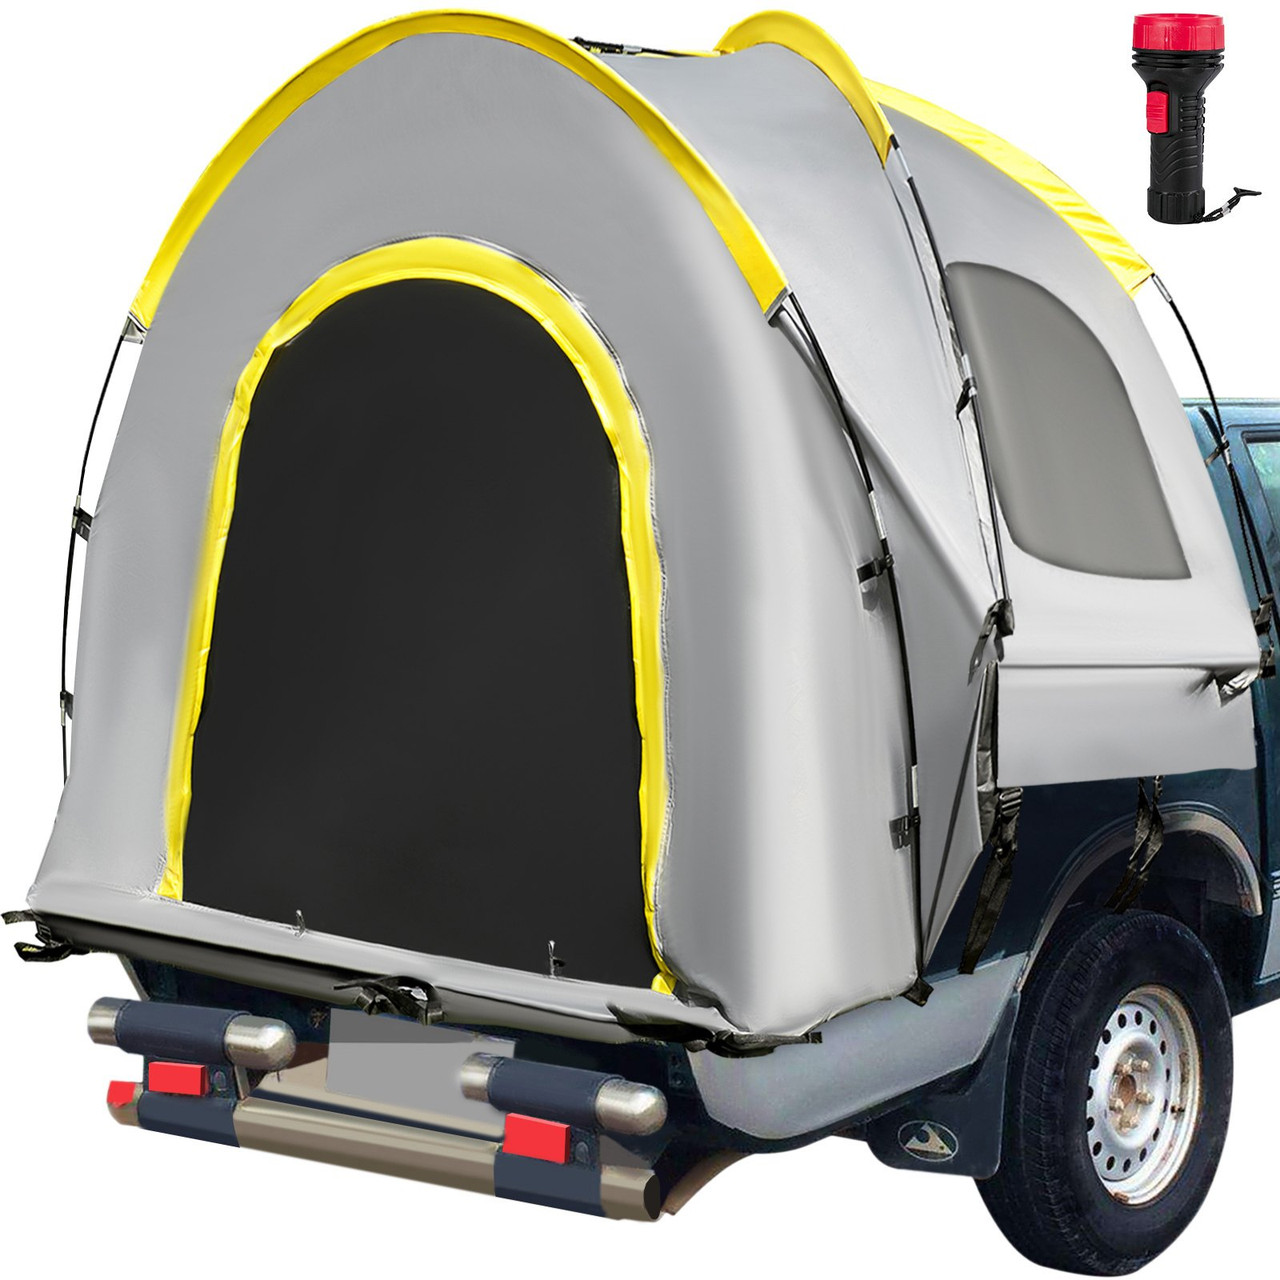 Truck Tent 5-5.2 Truck Bed Tent, Full-Size Pickup Tent, Waterproof Truck Camper, 2 Mesh Windows, Easy To Setup Truck Tents For Camping, Hiking, Fishing, Grey Color